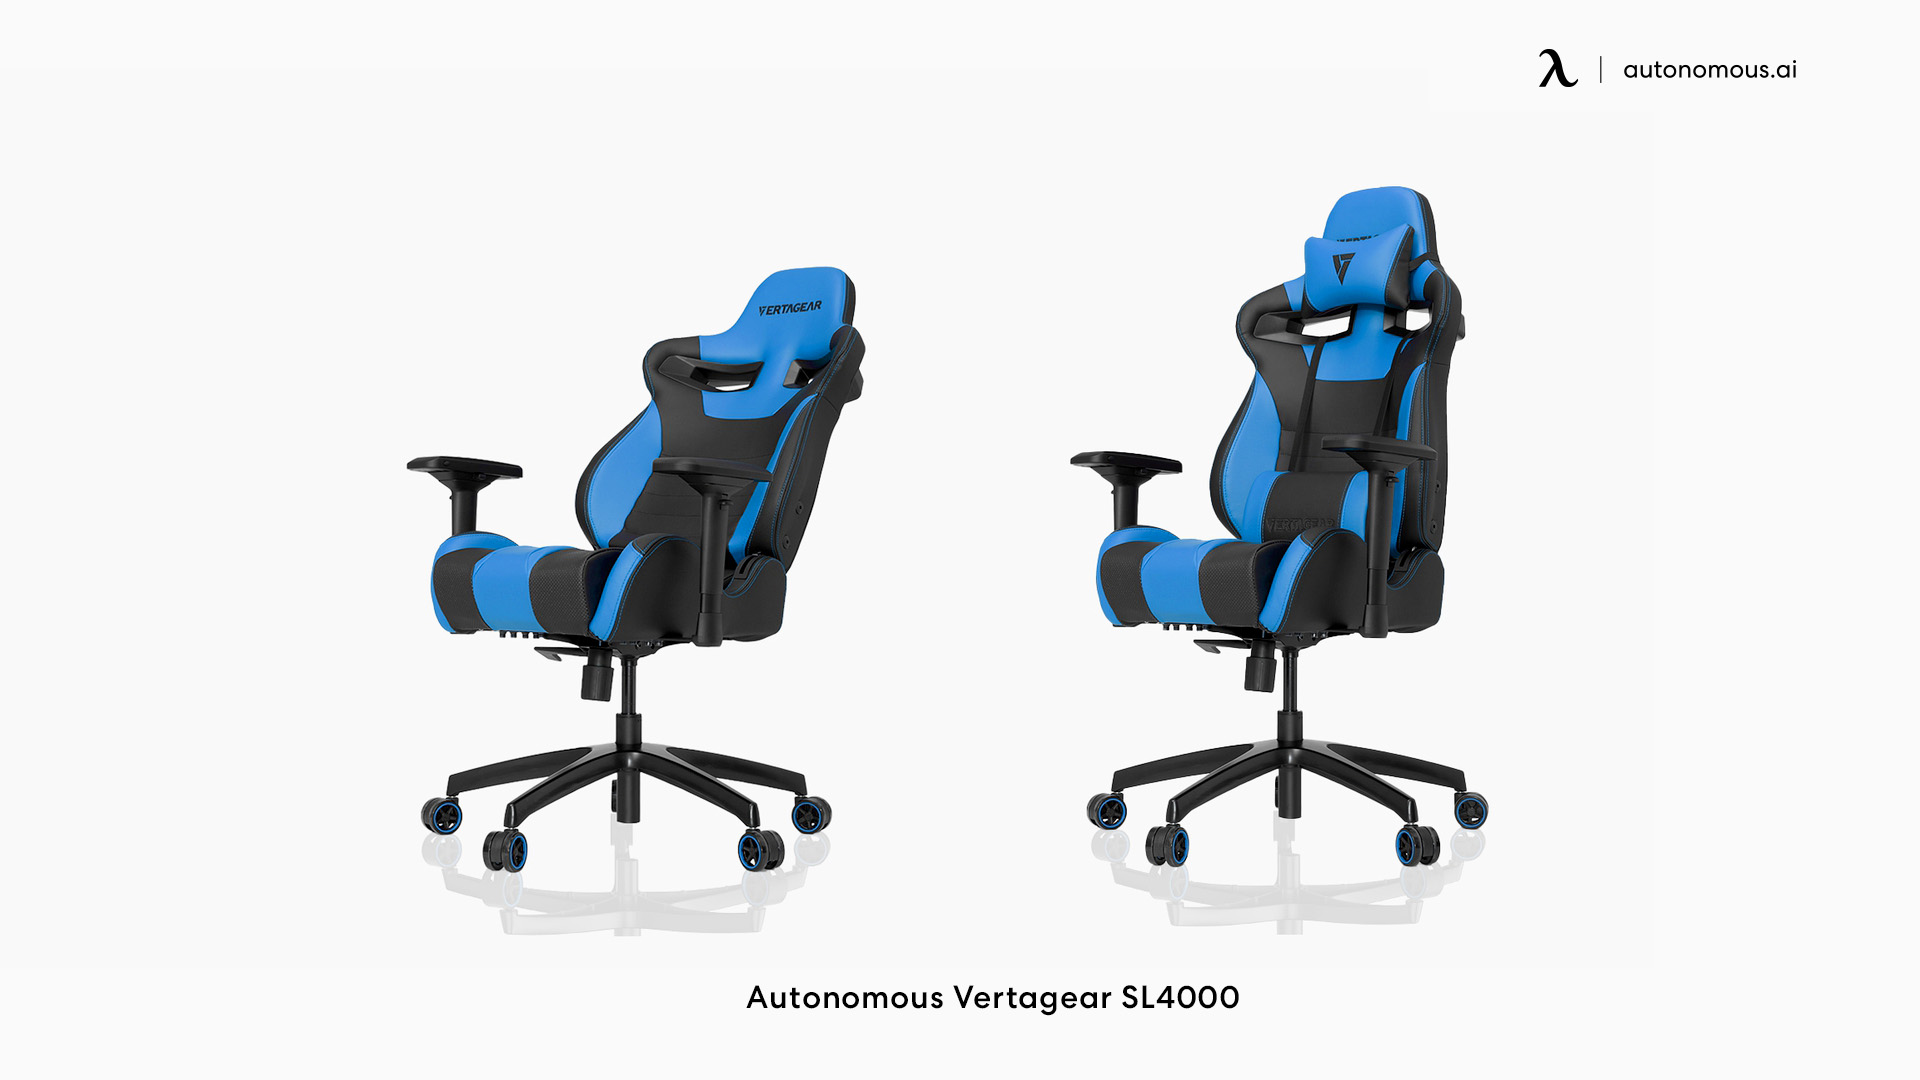 Gaming or ergonomic chair